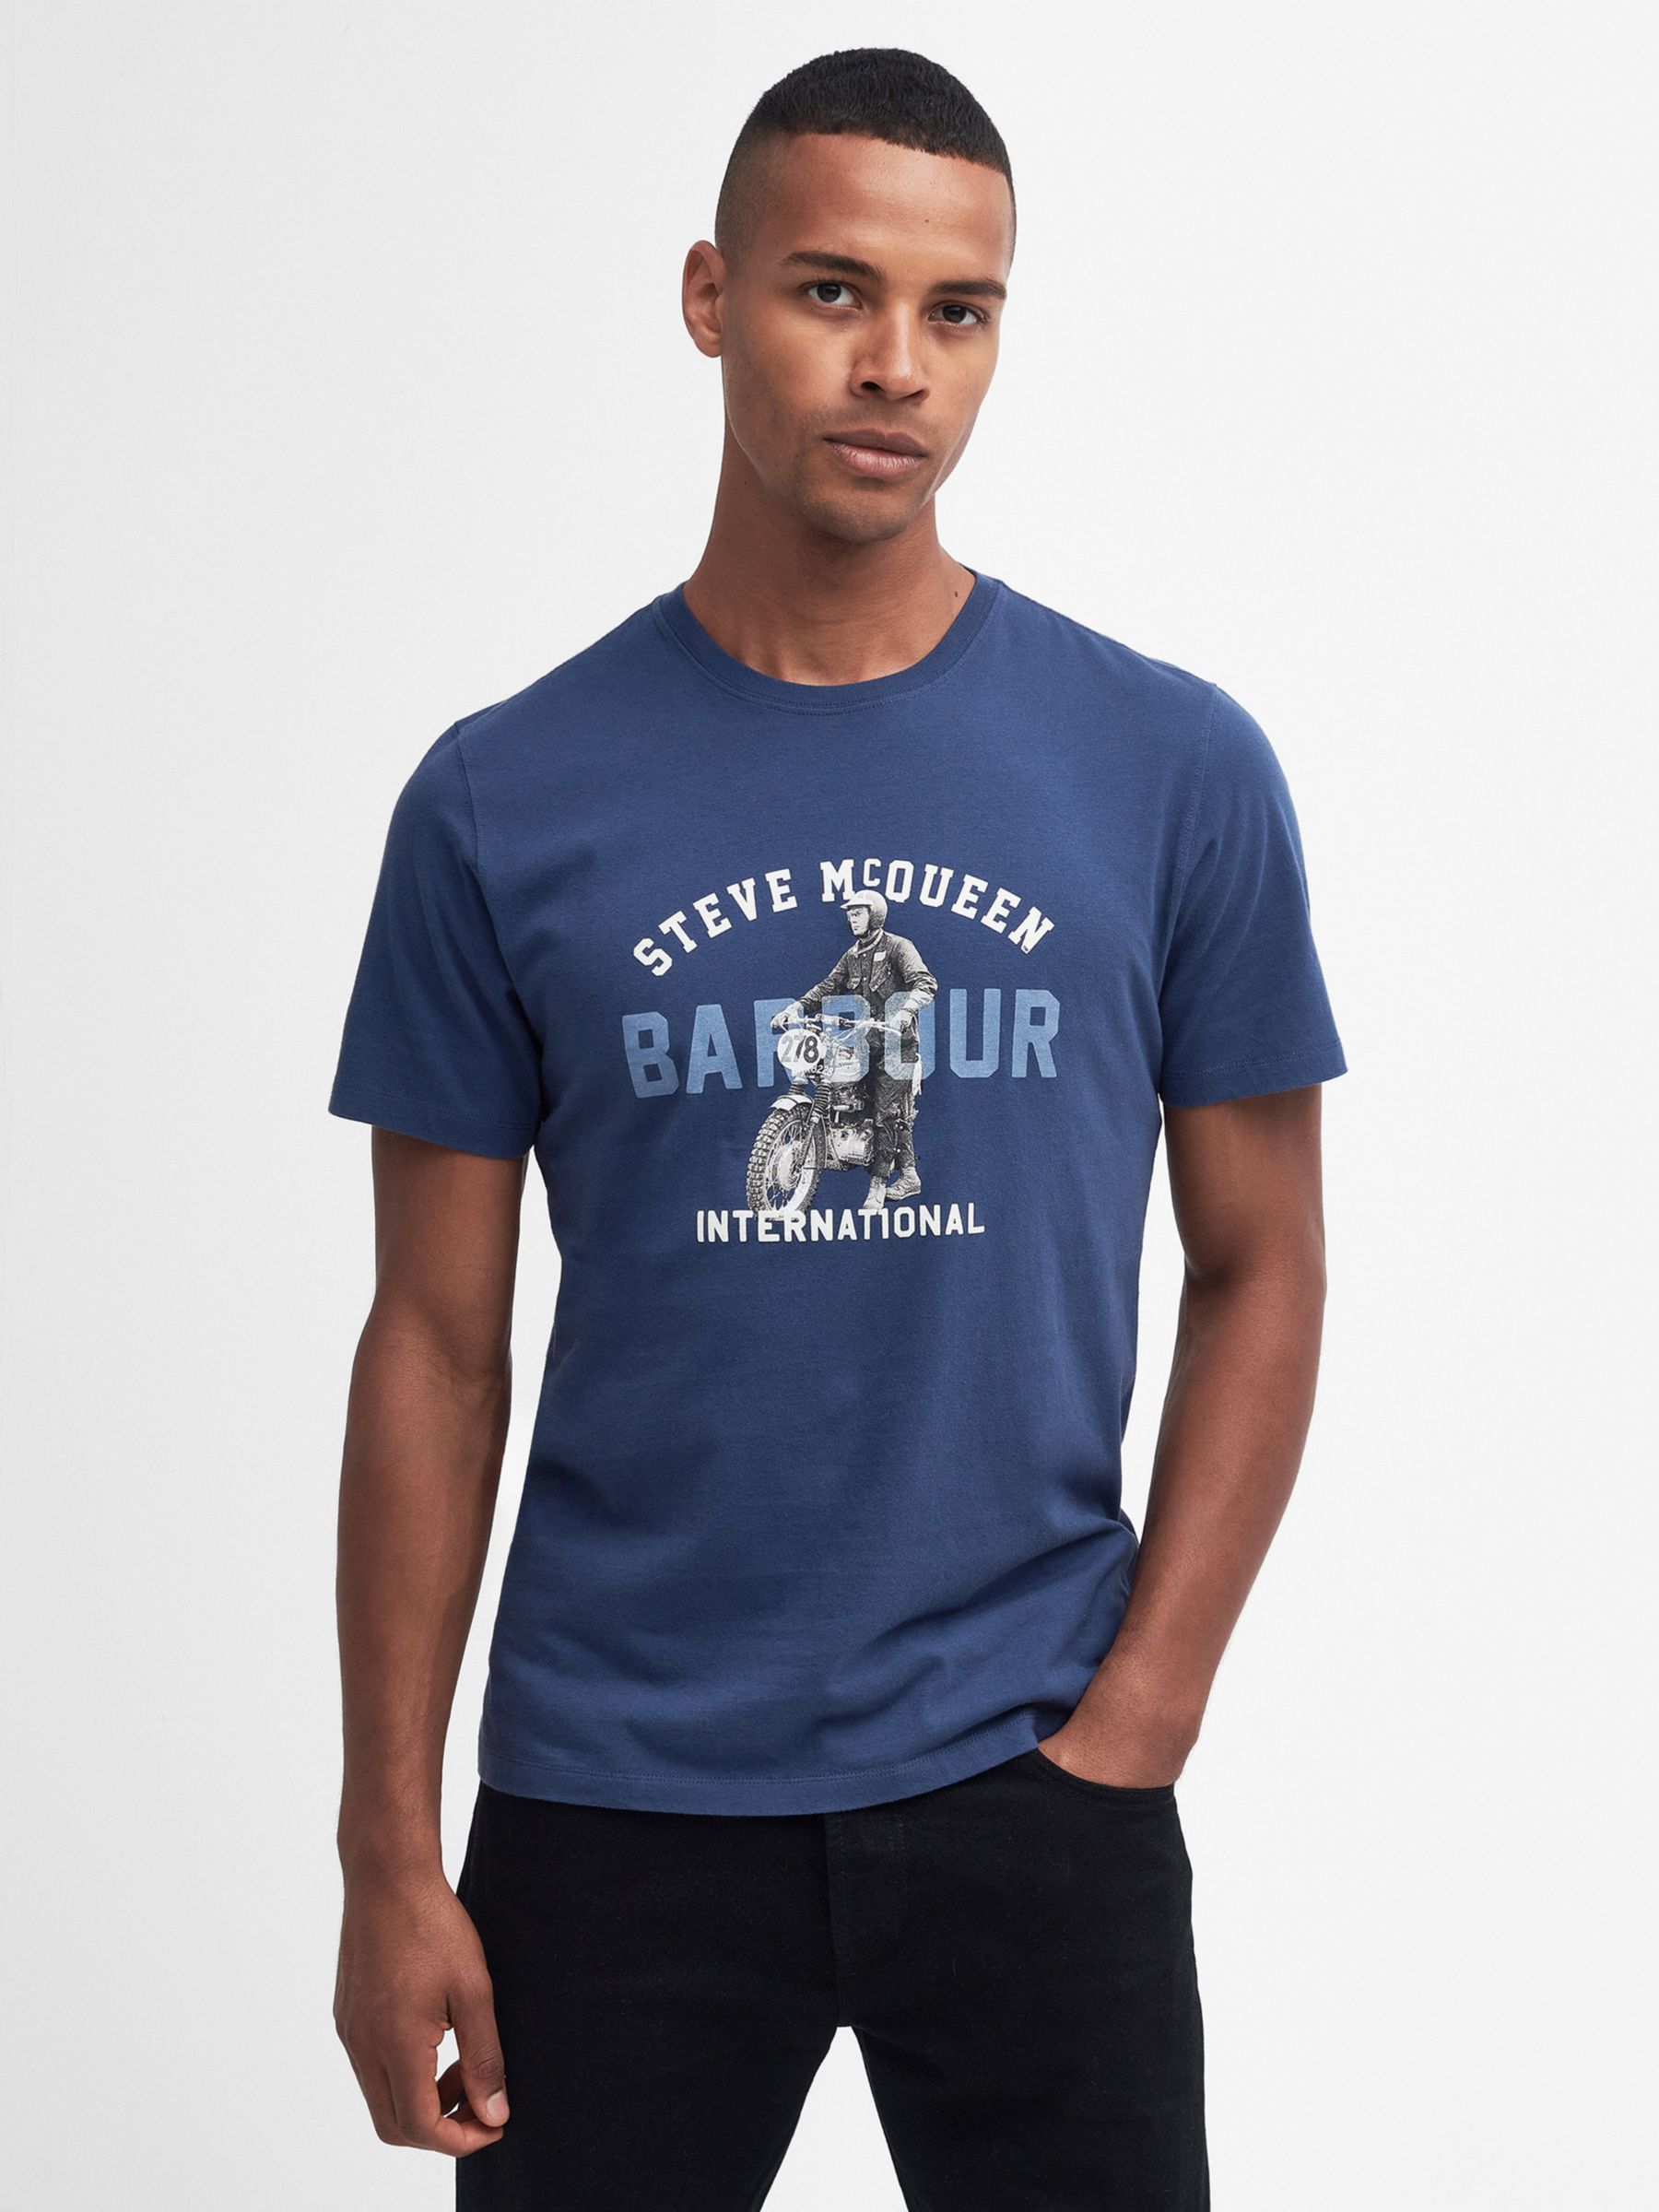 Barbour International Speedway T-Shirt, Navy, M